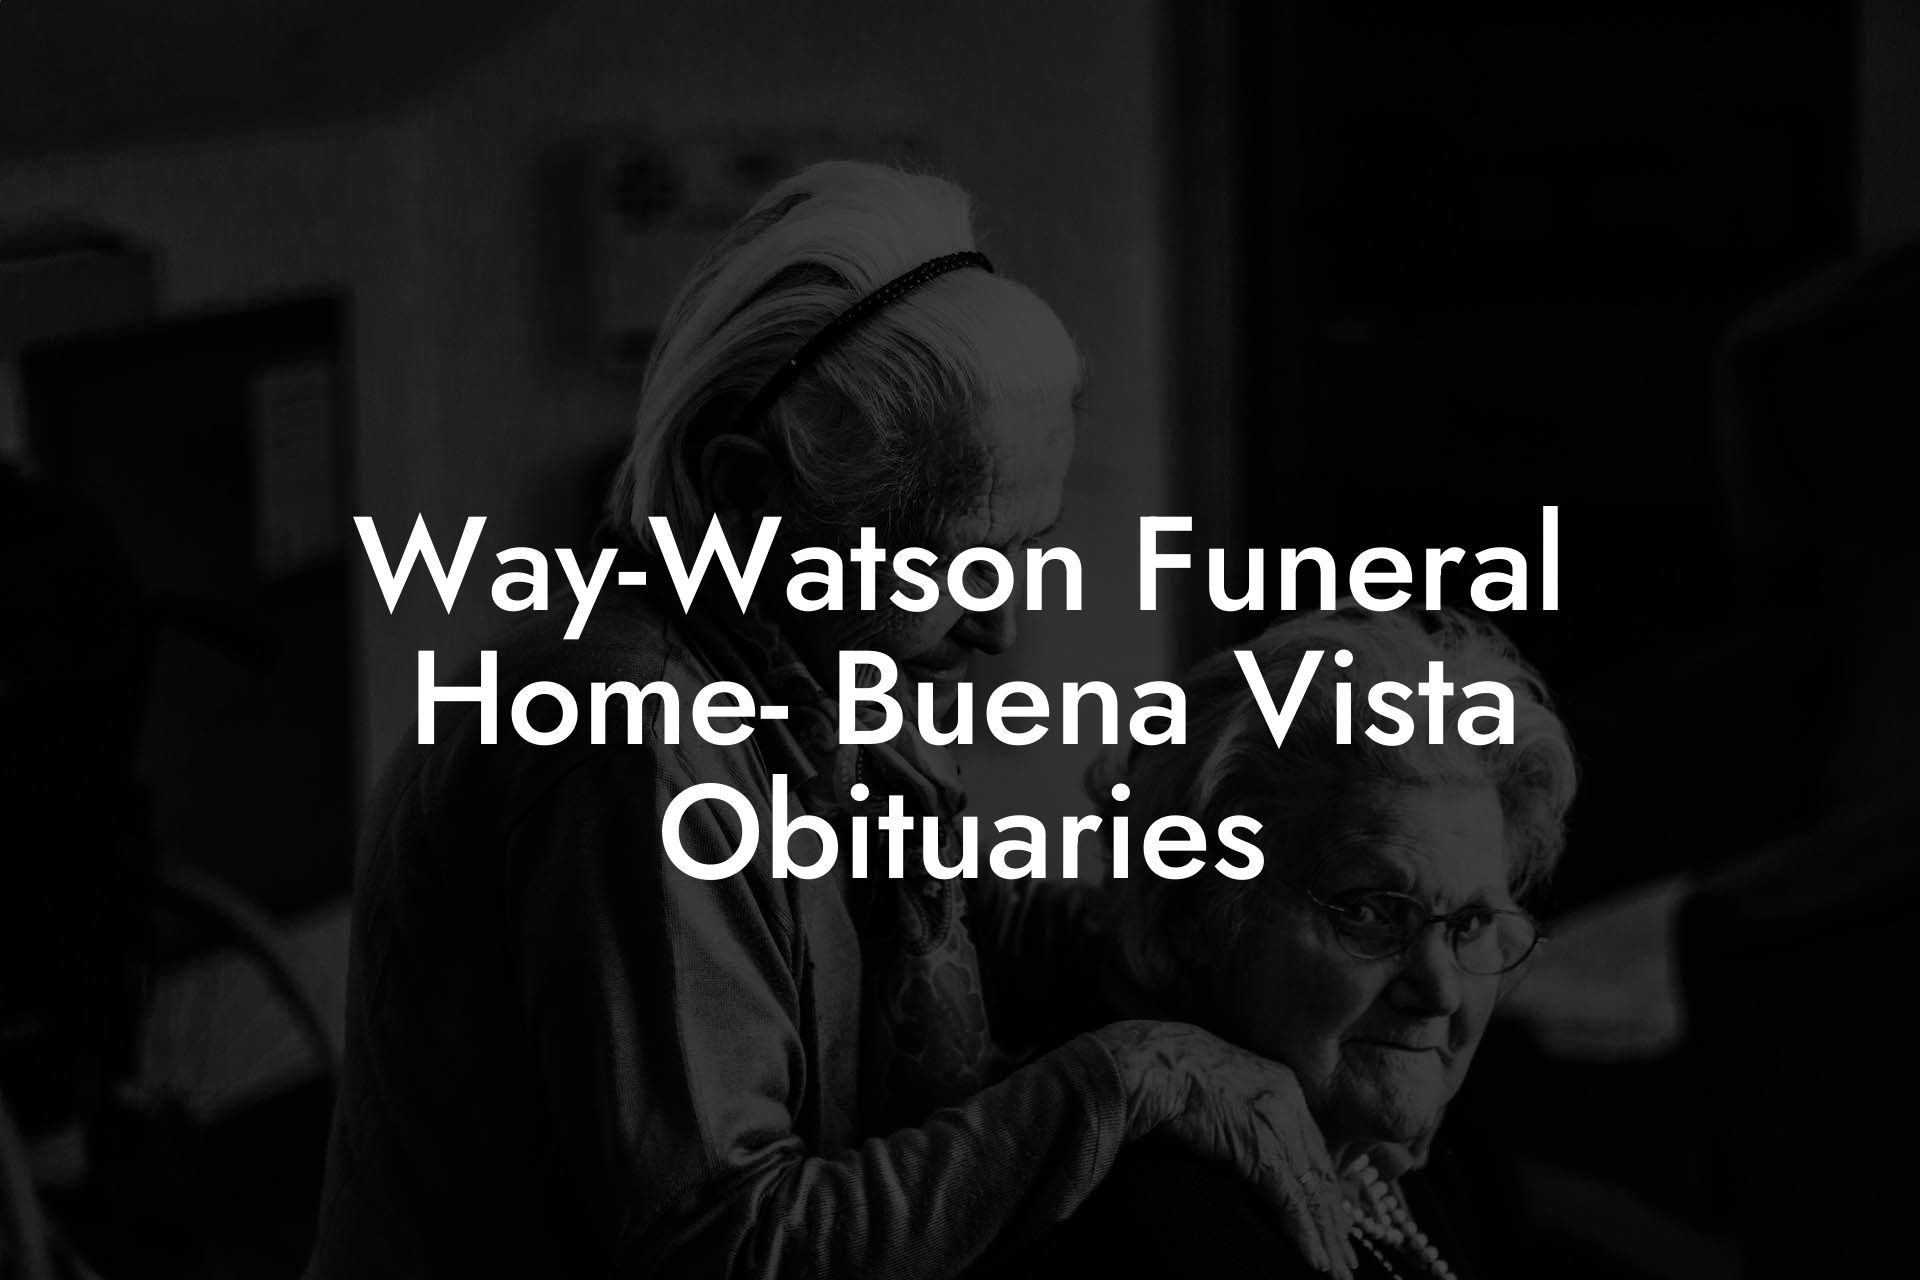 Way-Watson Funeral Home- Buena Vista Obituaries